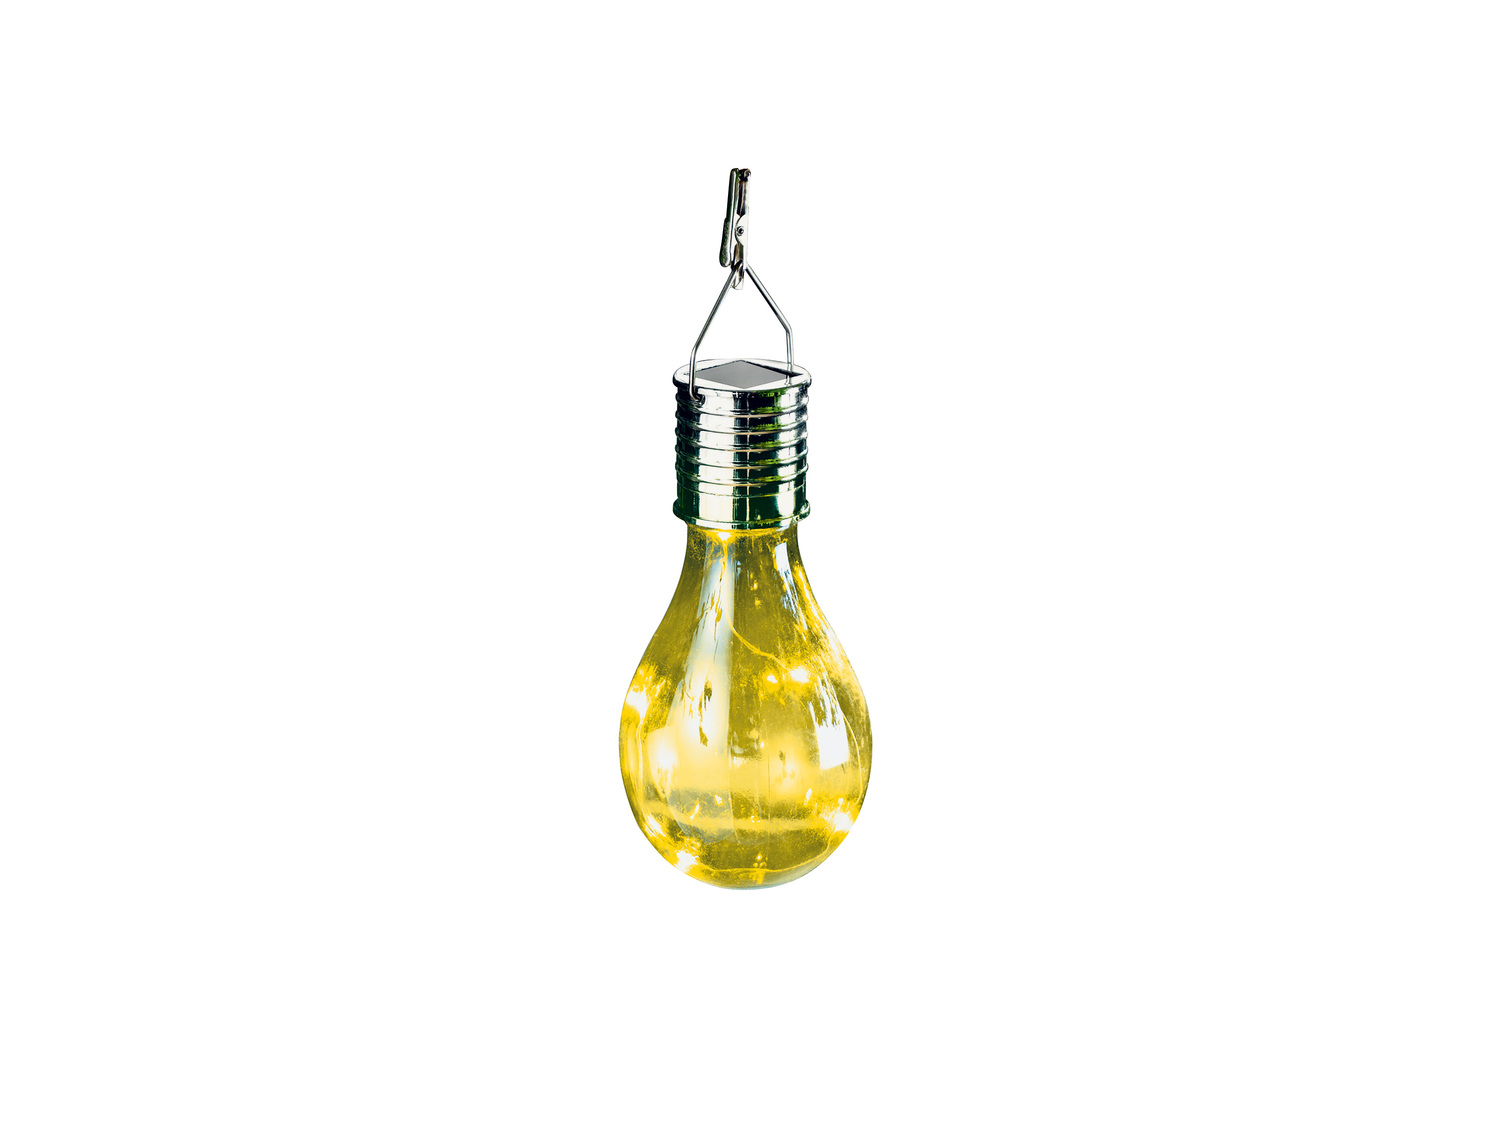 Dekoracyjna lampa solarna LED Melinera, cena 12,99 PLN 
4 kolory 
- 7,5 x 15 cm ...